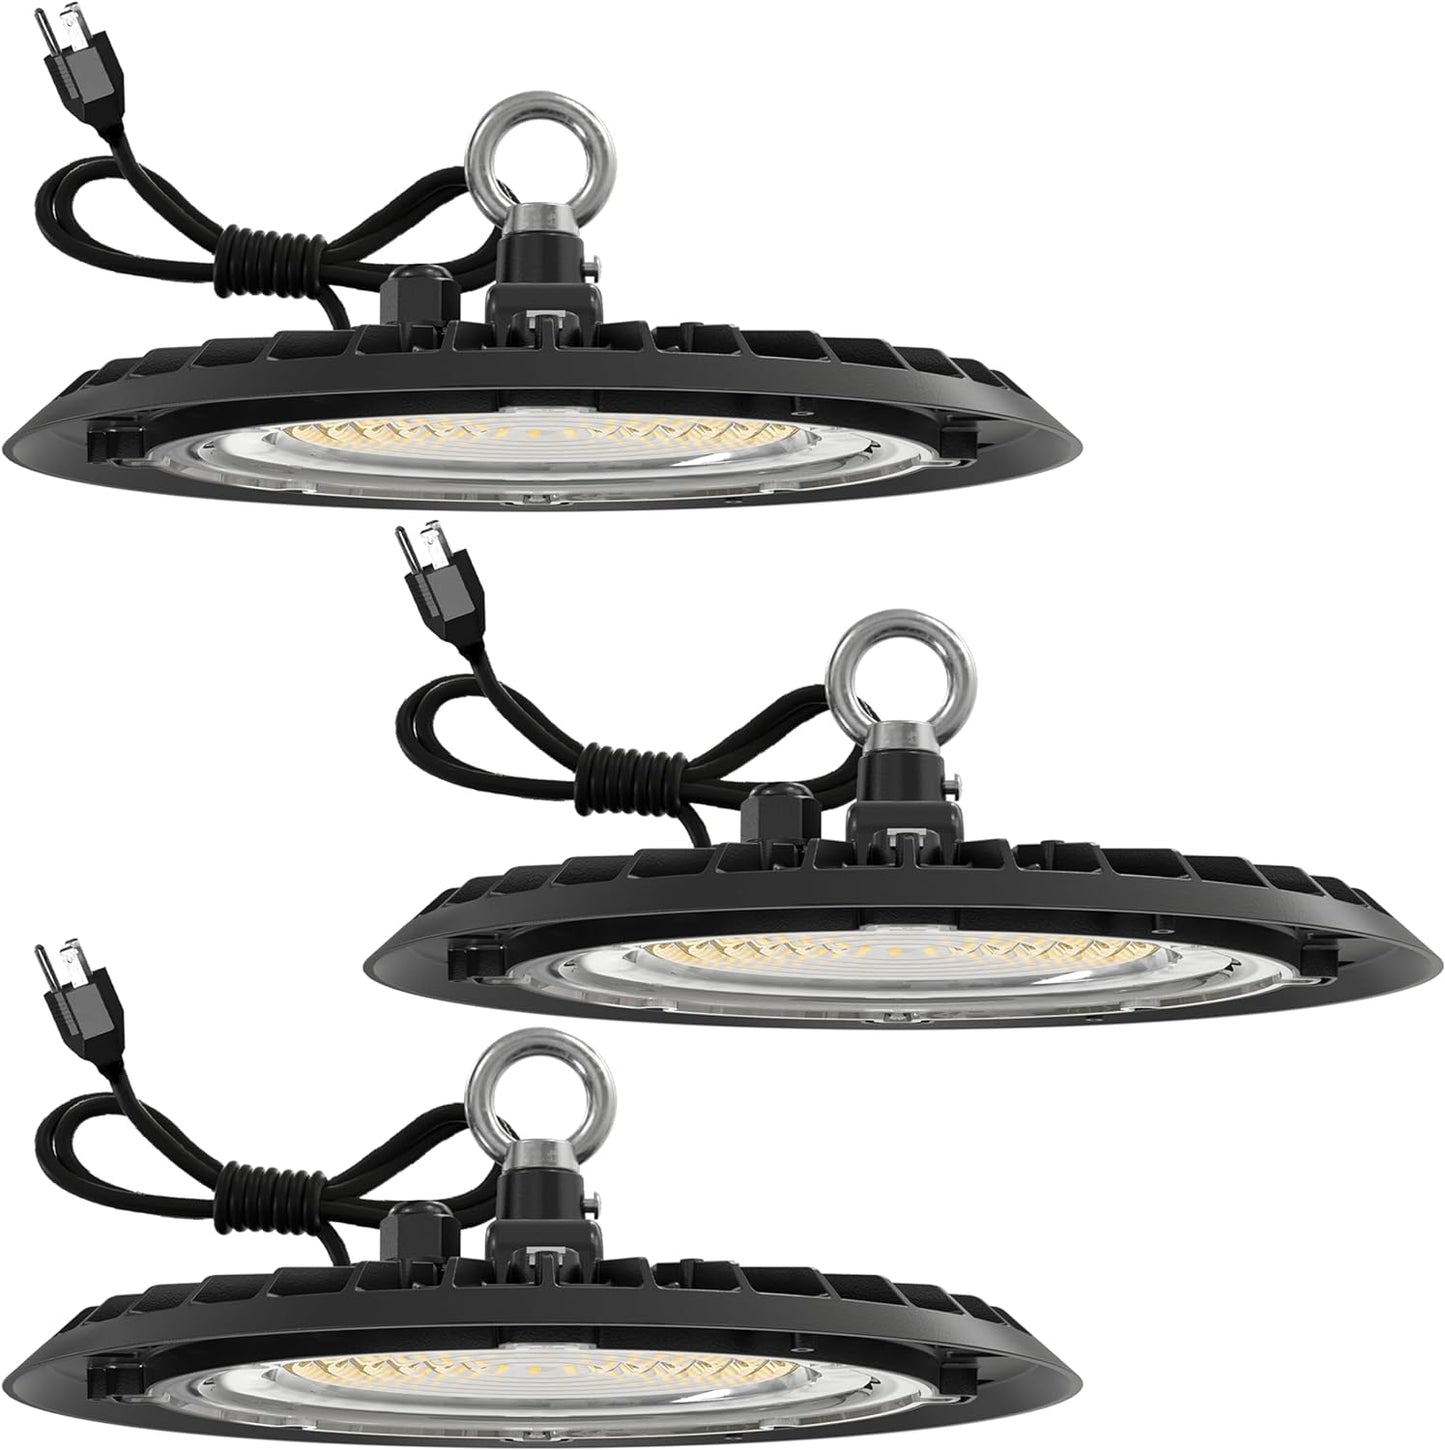 Sunco UFO LED Plug & Play High Bay Light, Lighting for Warehouse, 5000K Daylight, 150W, Power Cord Included, 19500 LM, 120VAC, IP65 Waterproof Shatterproof Fixture - UL Listed 3 Pack (5000K Dayligh